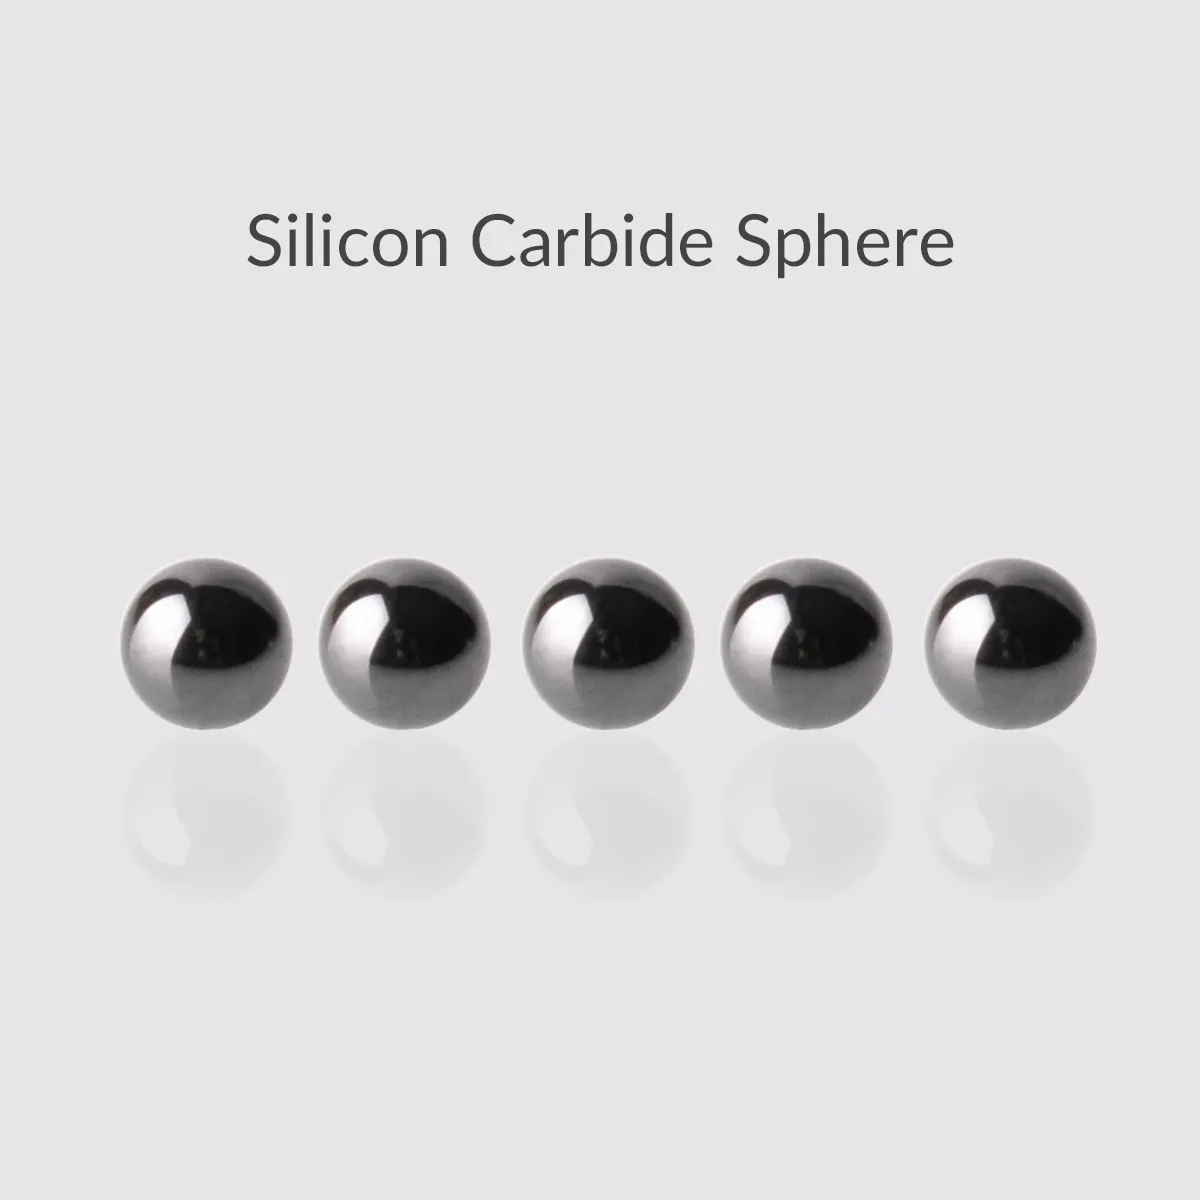 5mm Terp Pearls Insert Black Silicon Carbide Sphere Sic Smoking Ball f￶r 14mm 18mm Manlig kvinnlig kvarts banger naglar glas bongs dab riggar